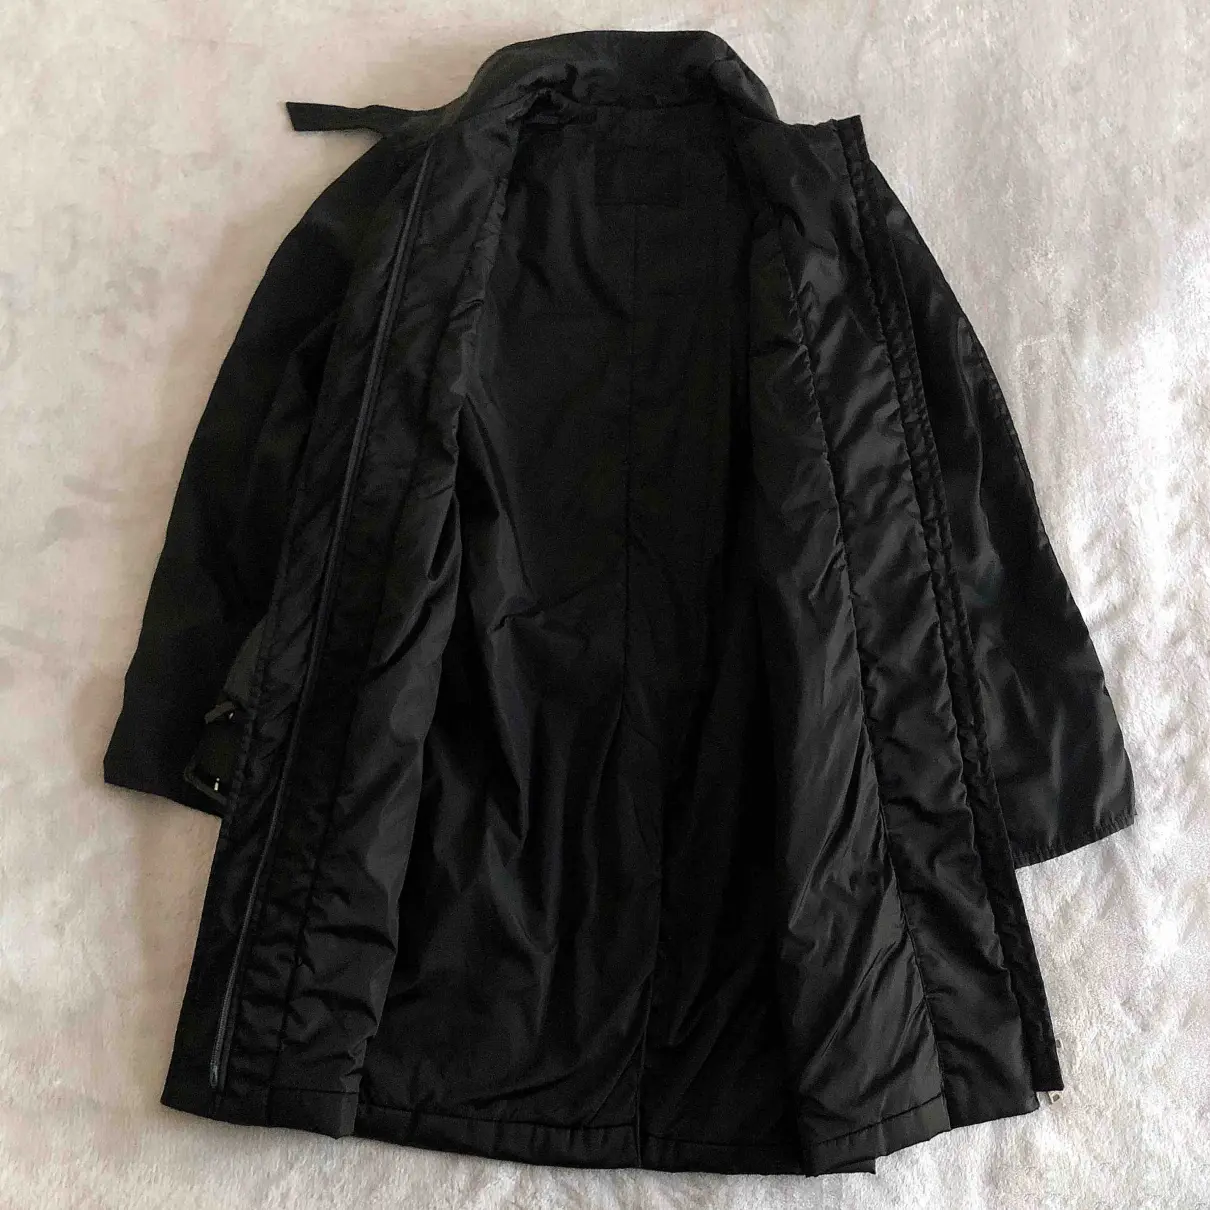 Buy Prada Black Polyester Coat online